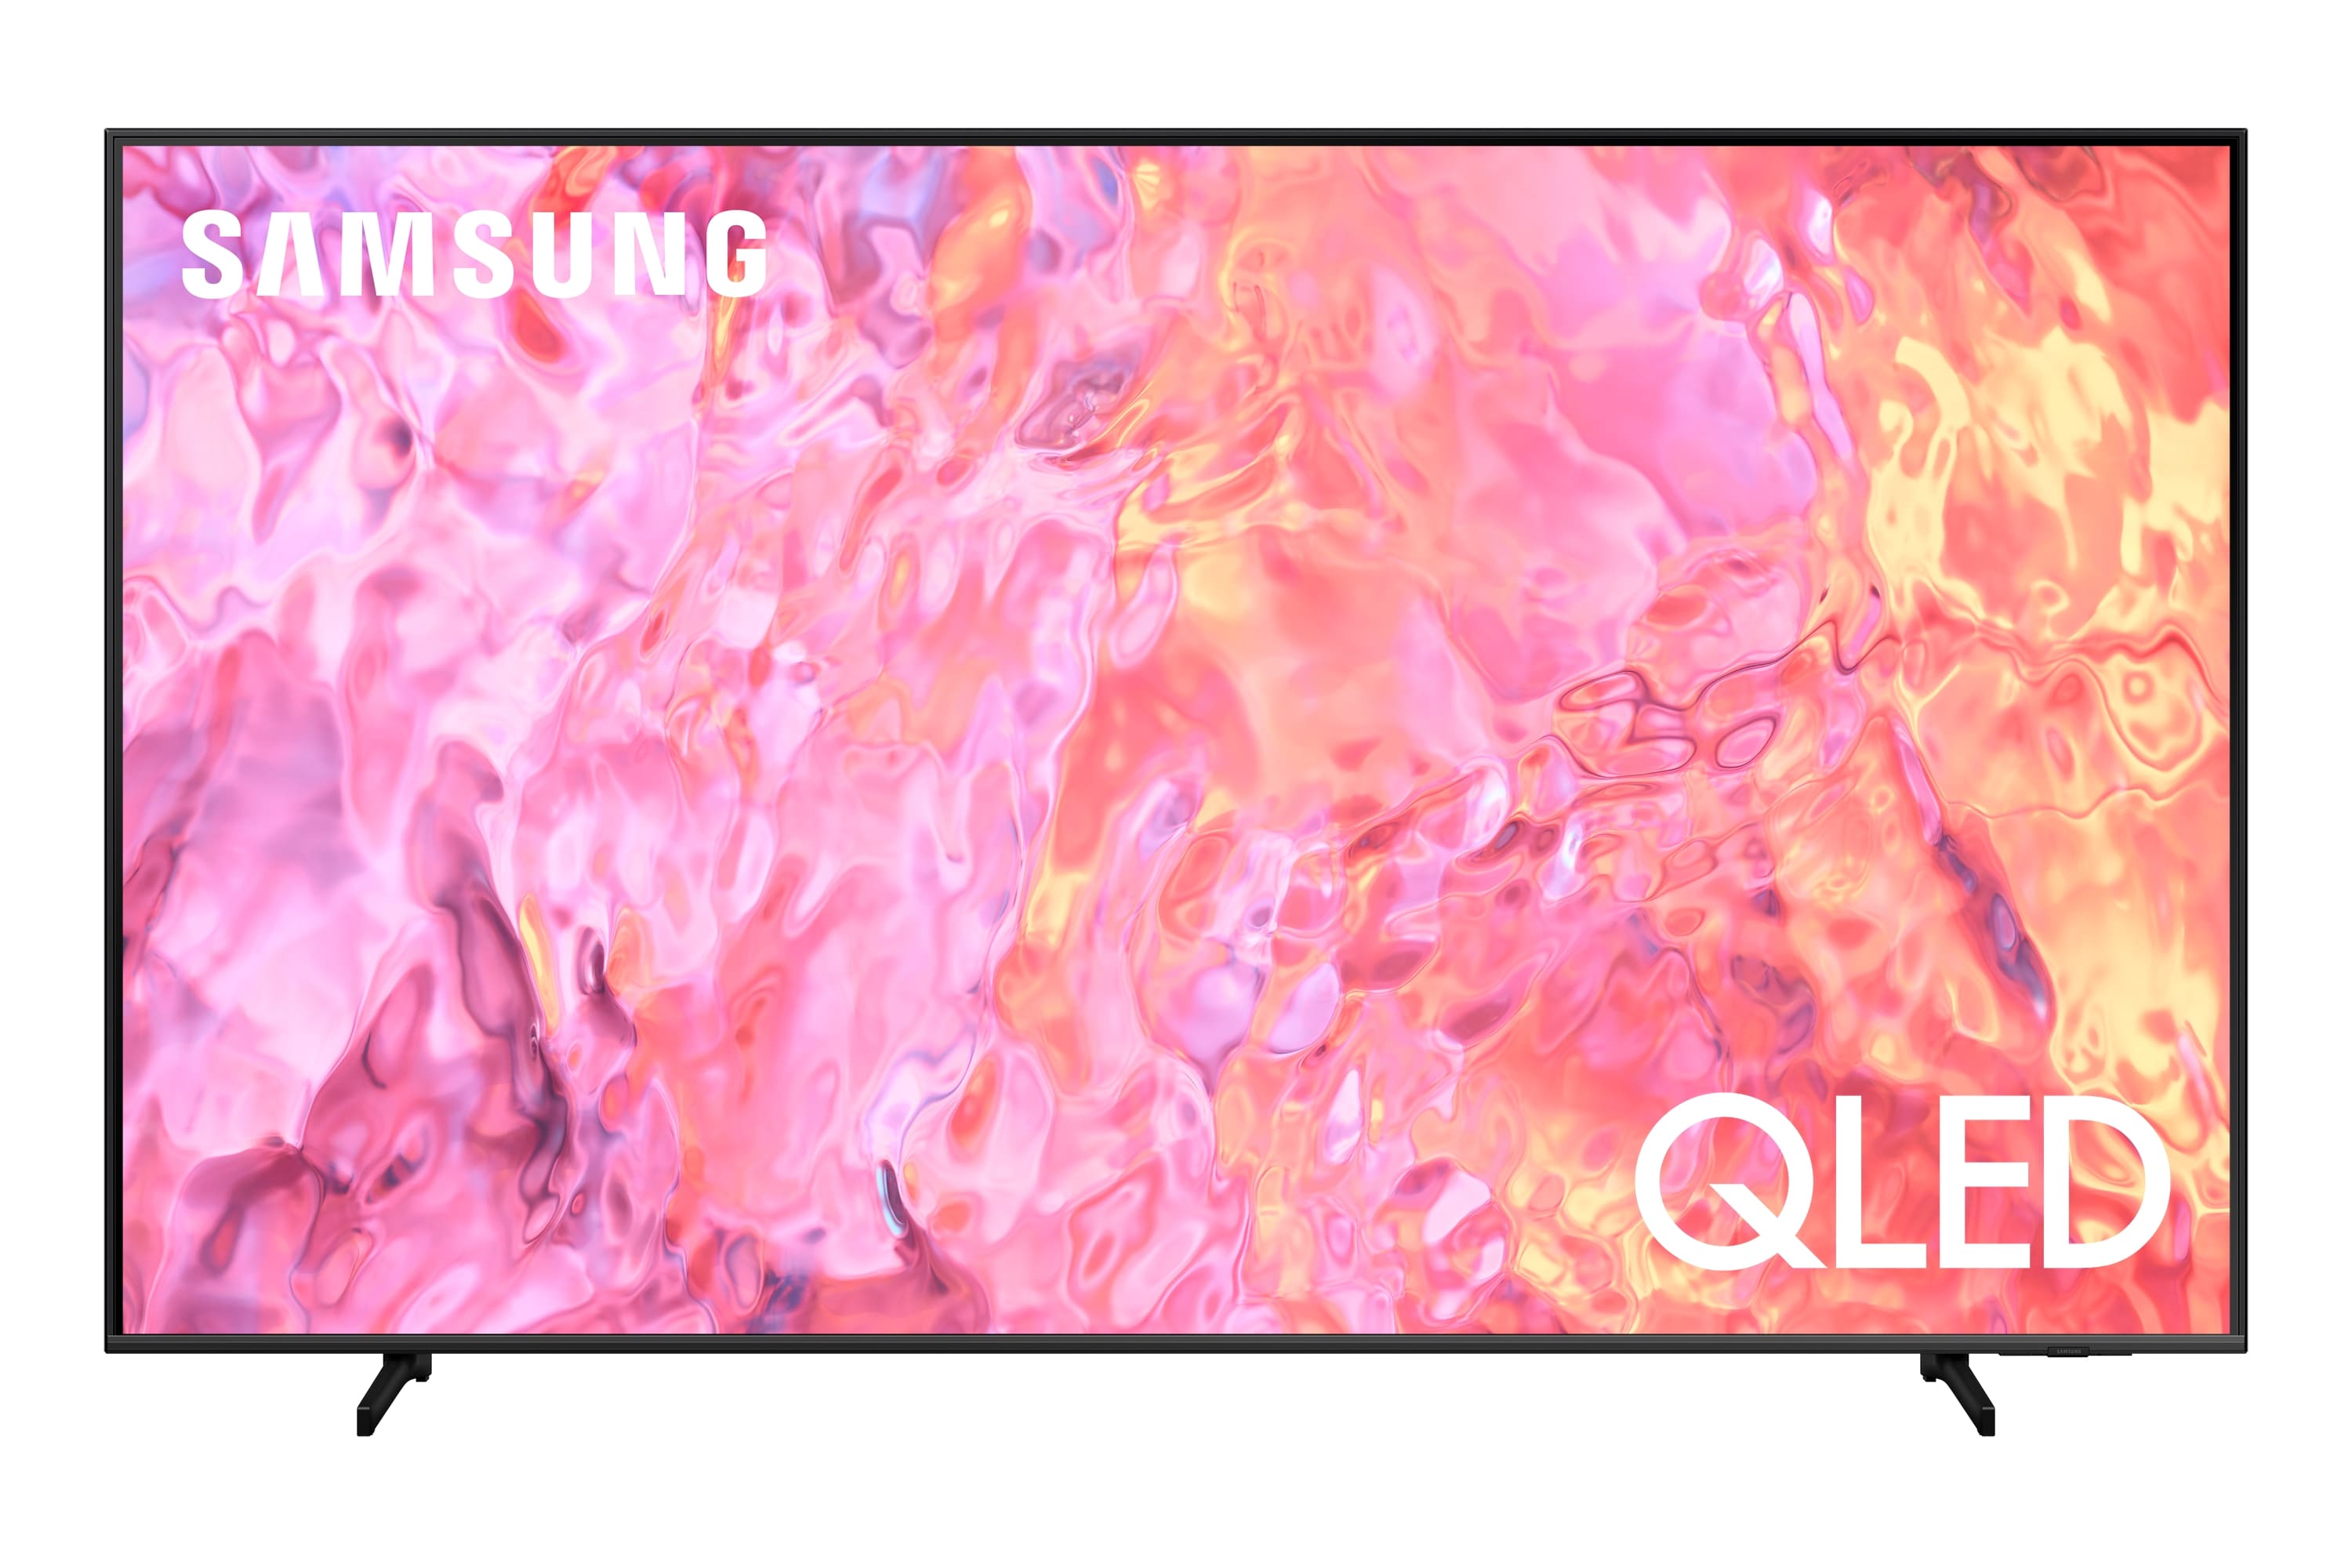 Samsung QLED TV 55"